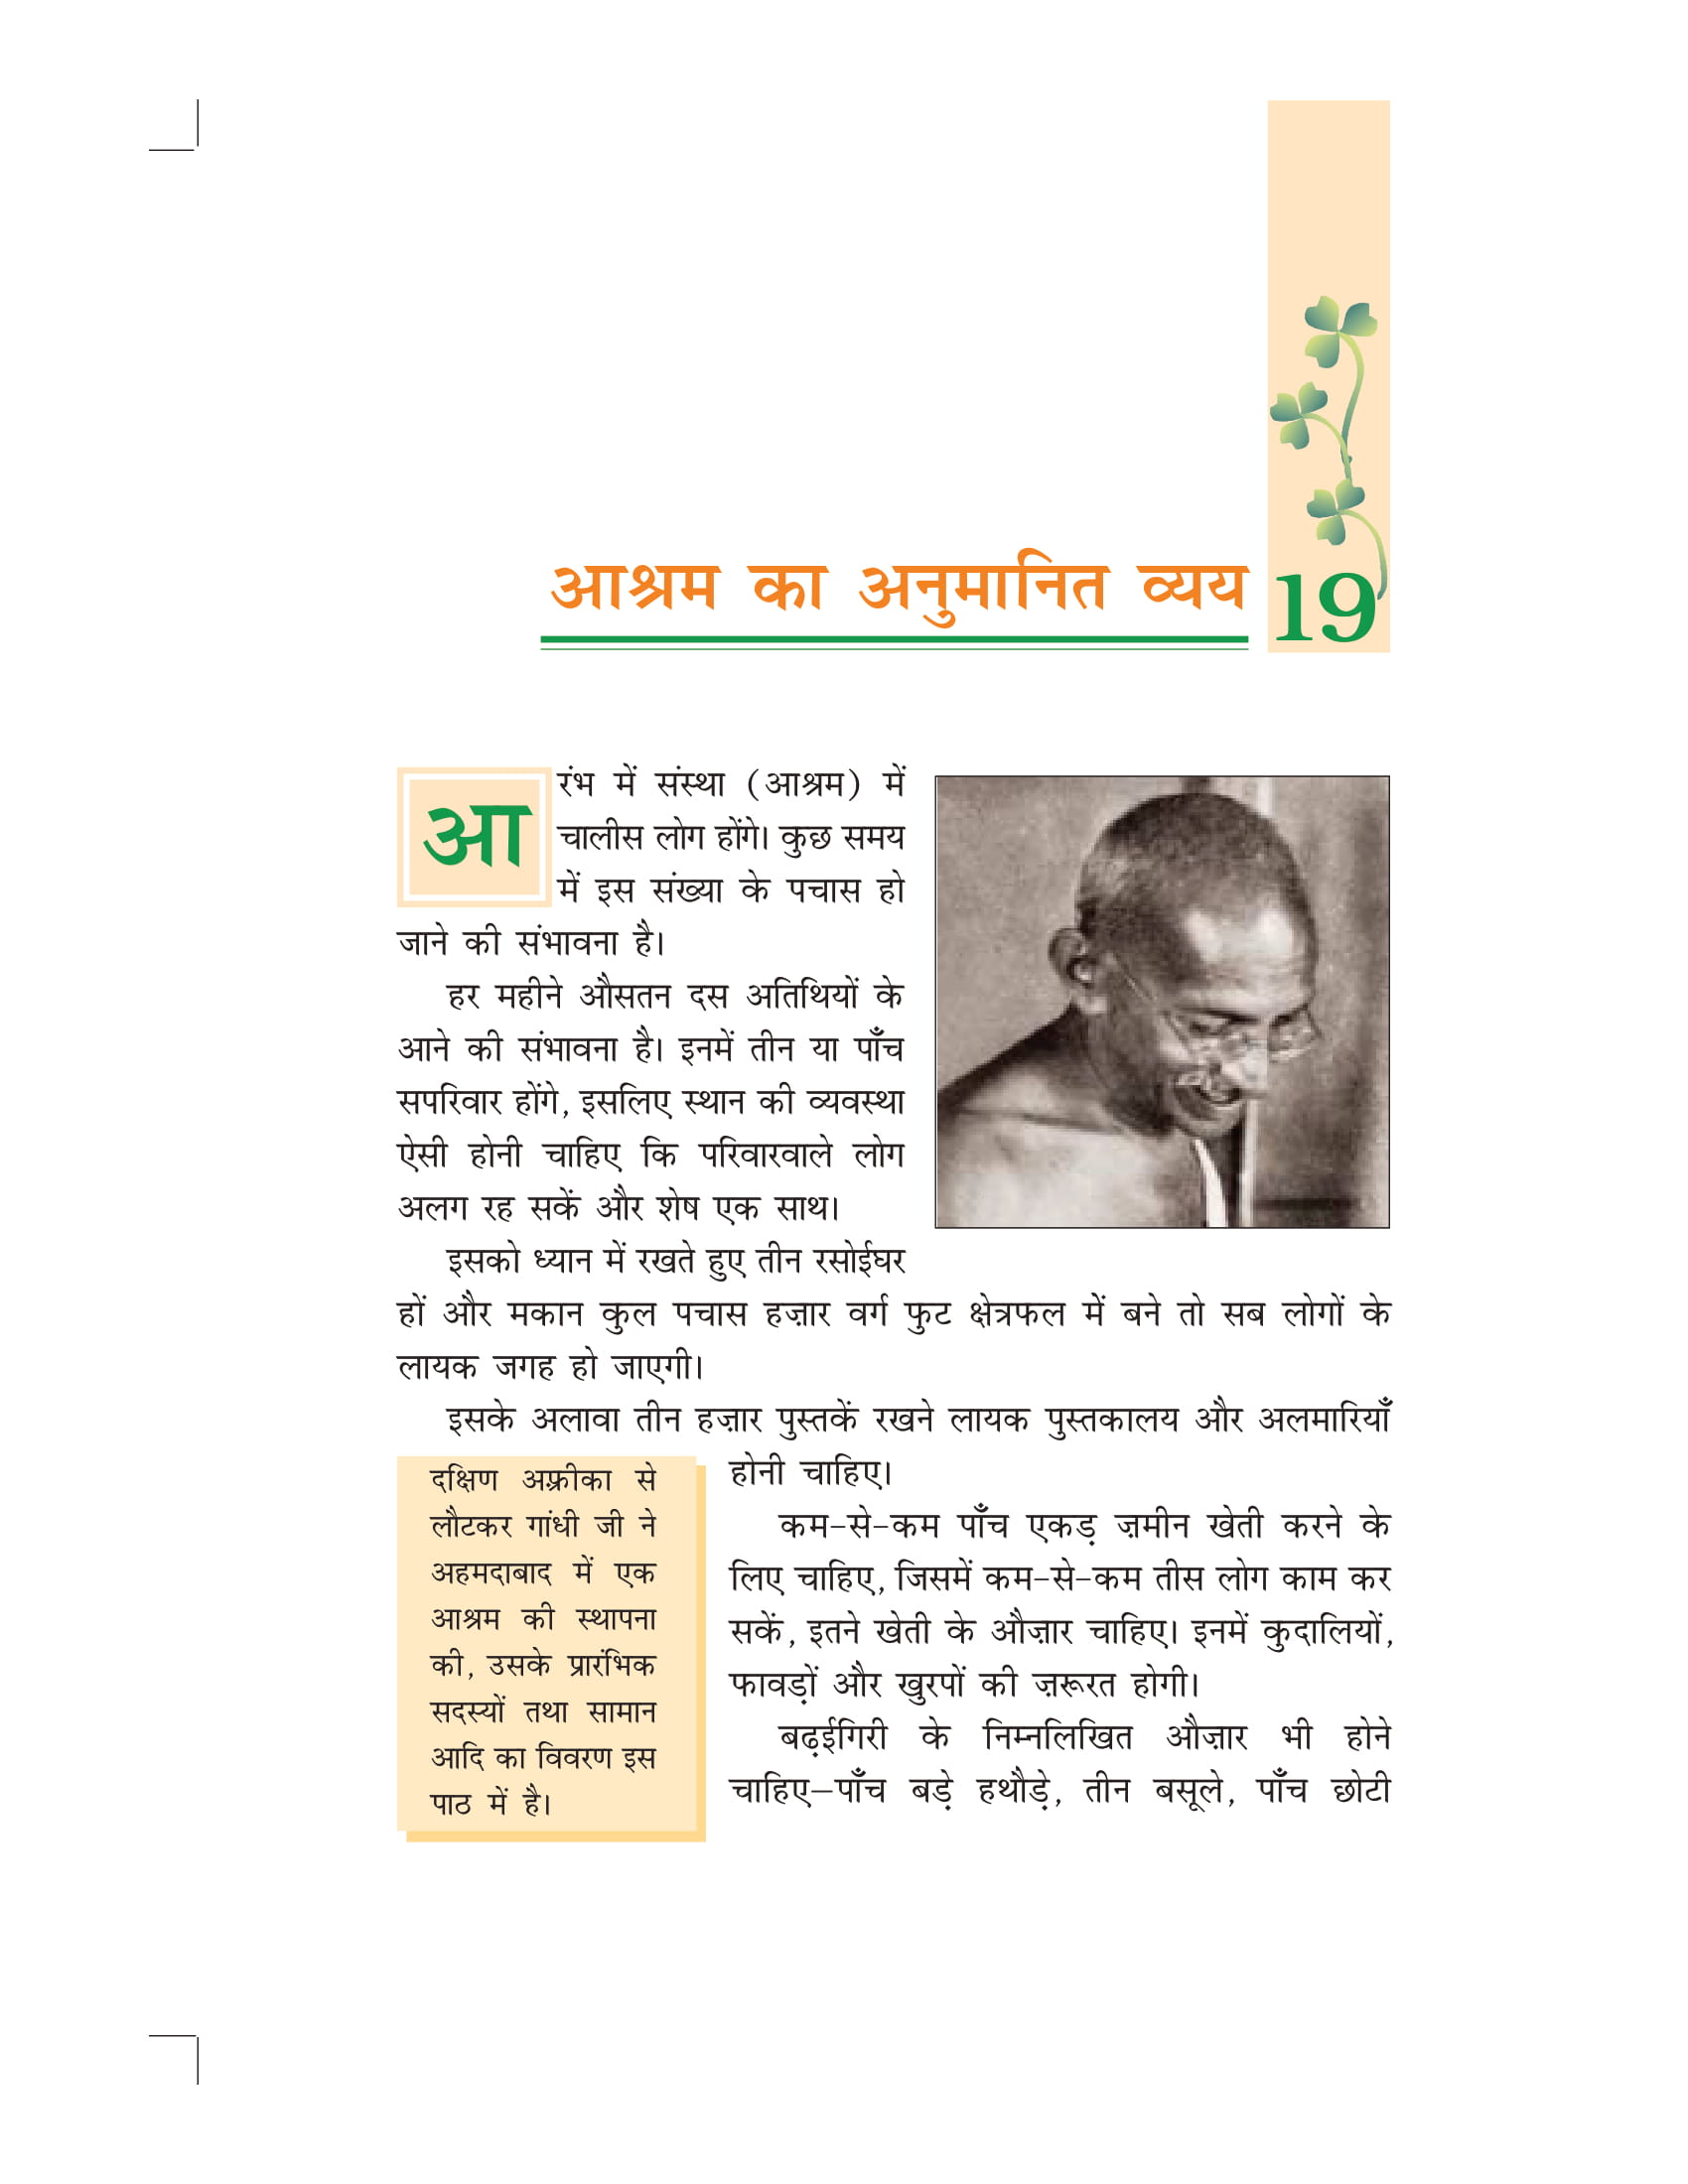 NCERT Book Class 7 Hindi (वसंत) Chapter 19 आश्रम का अनुमानित व्यय - Page 1